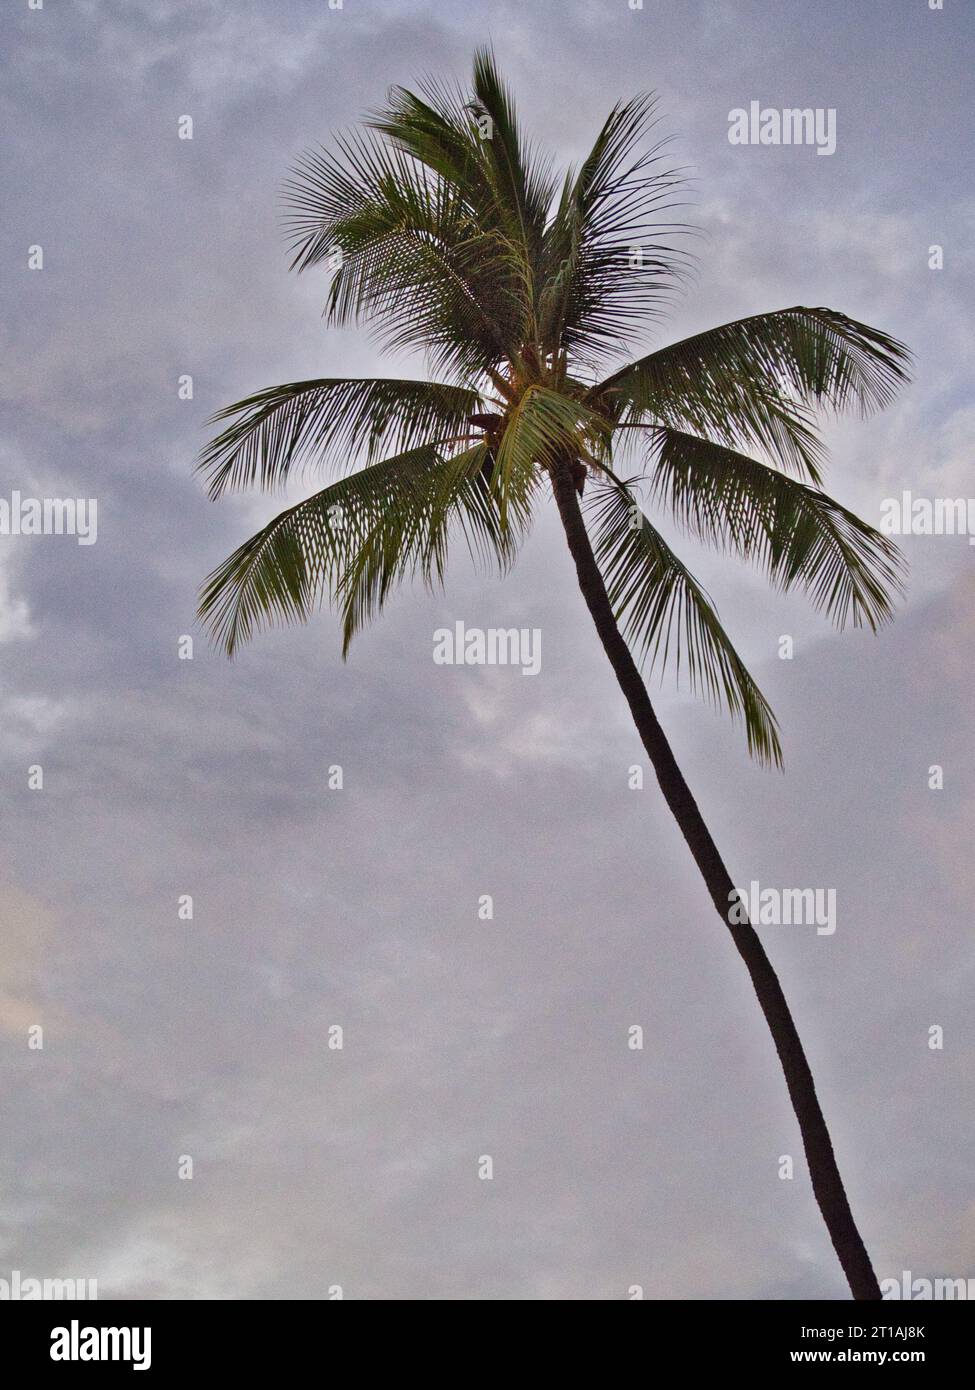 A single coconut palm tree is contrasted against the cloudy evening sky near the beach in Kailua-Kona, Big Island, Hawaii. Stock Photo